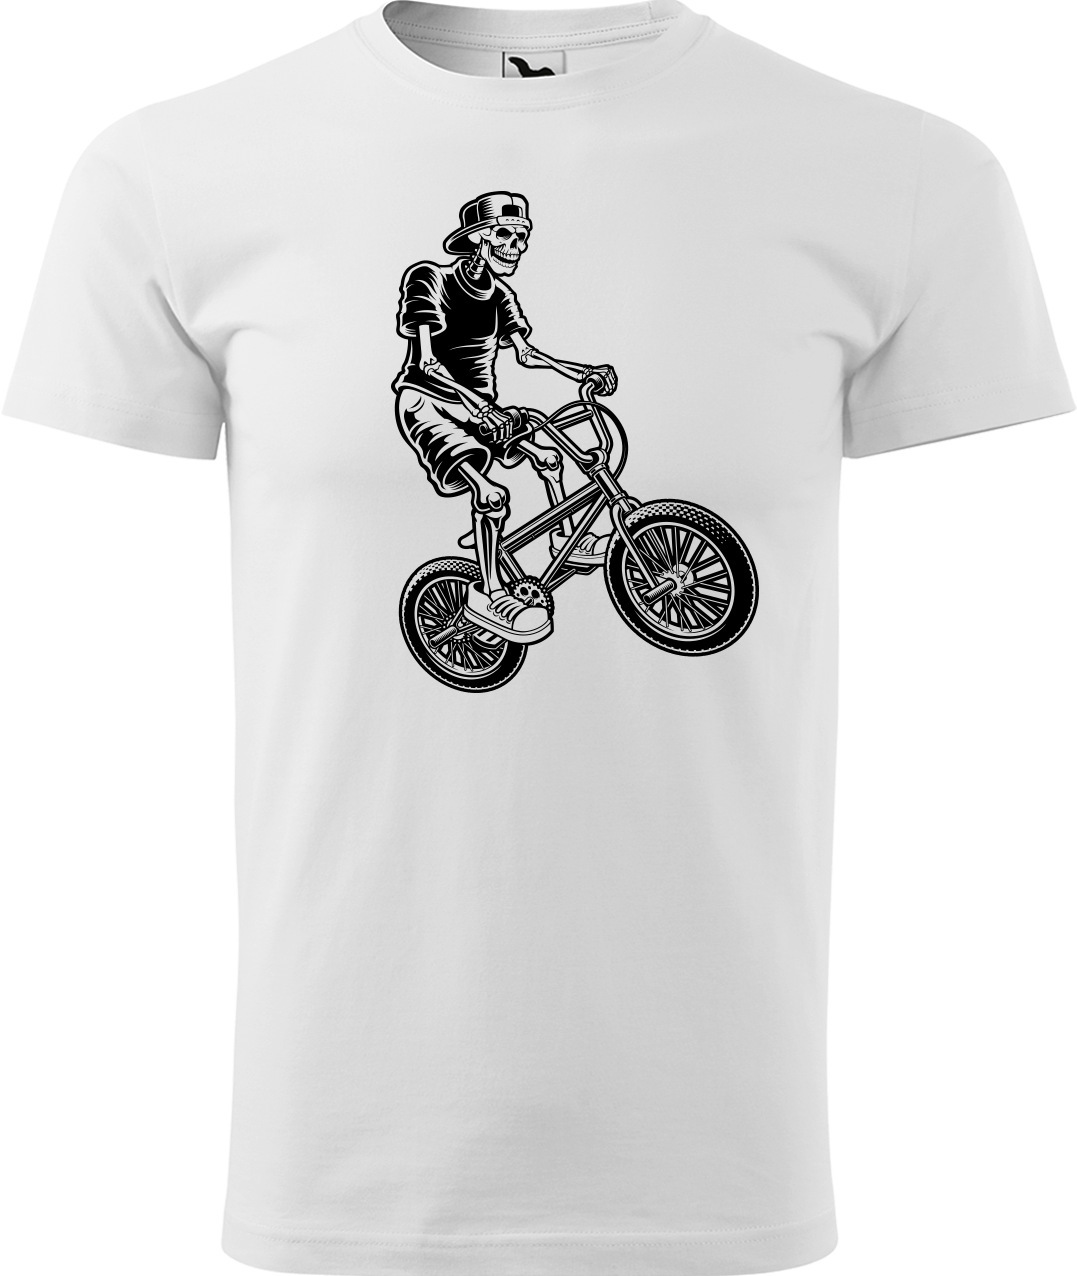 Pánské tričko s kolem - Trial Bike Velikost: M, Barva: Bílá (00)